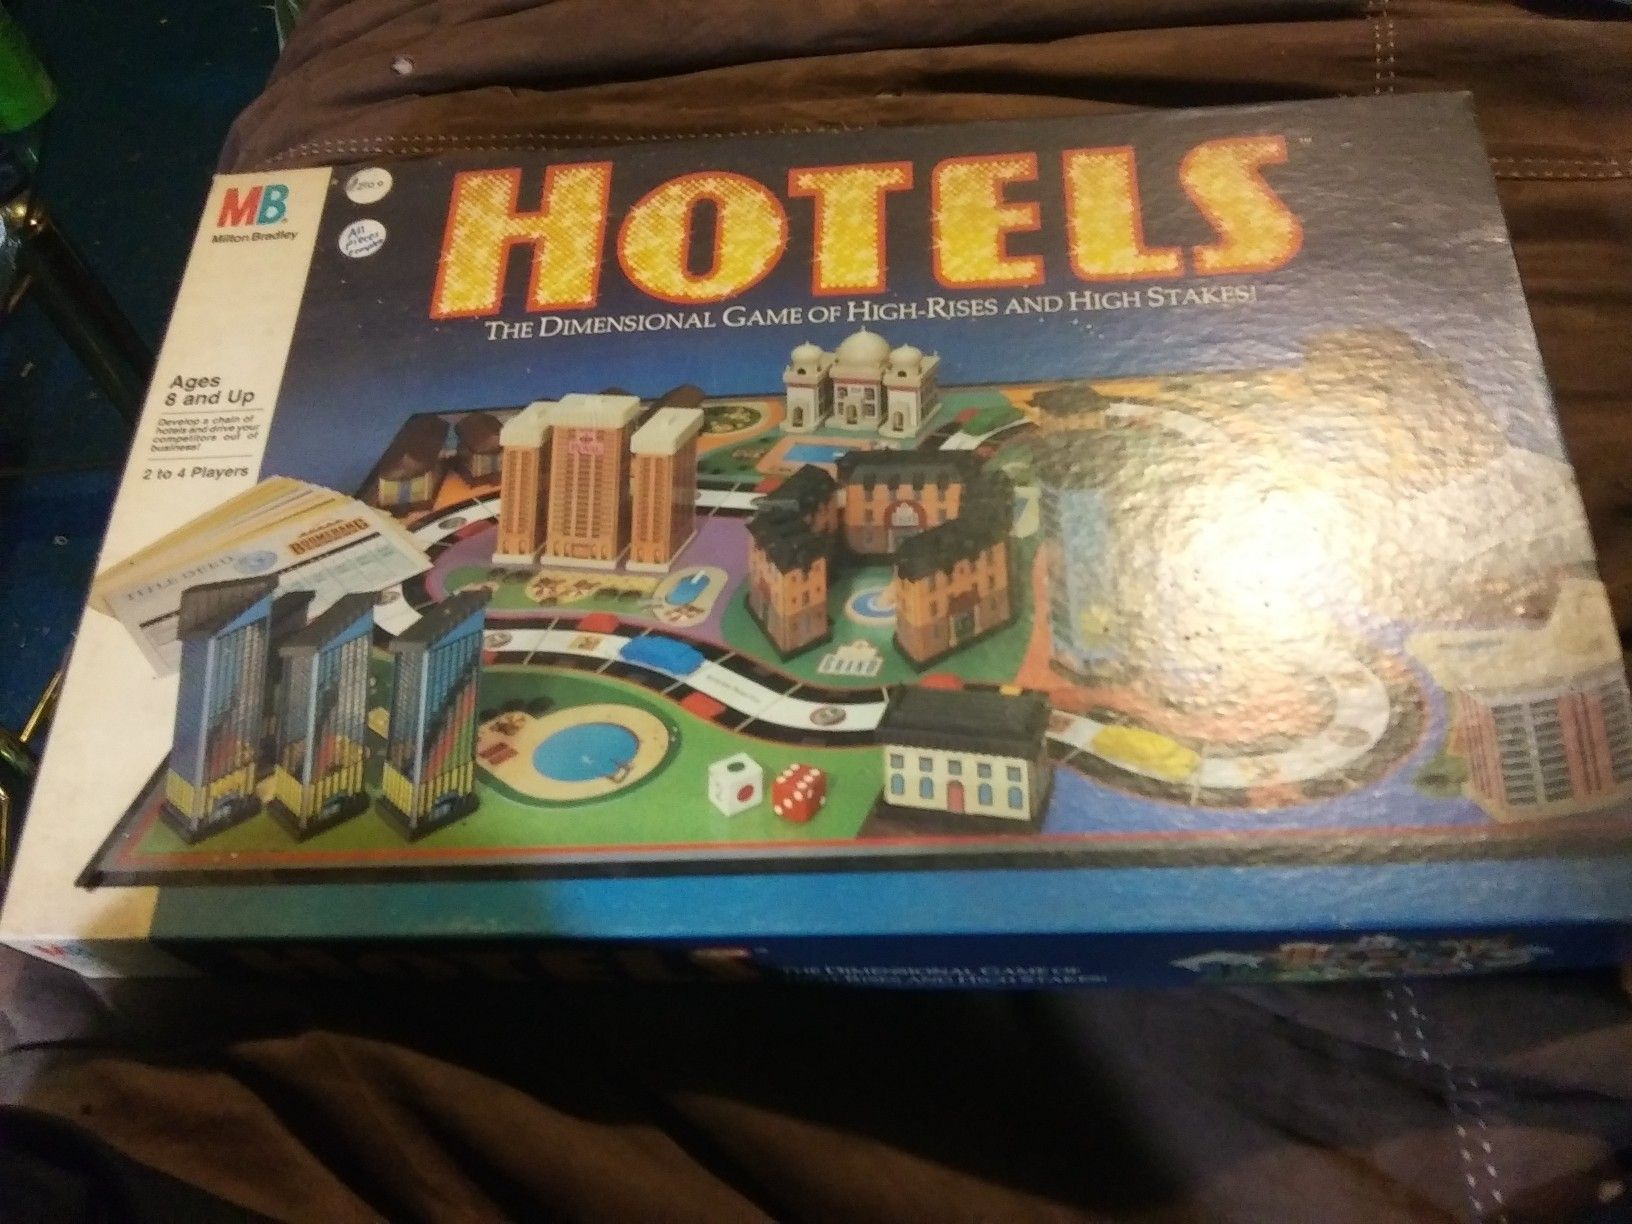 Hotels board game